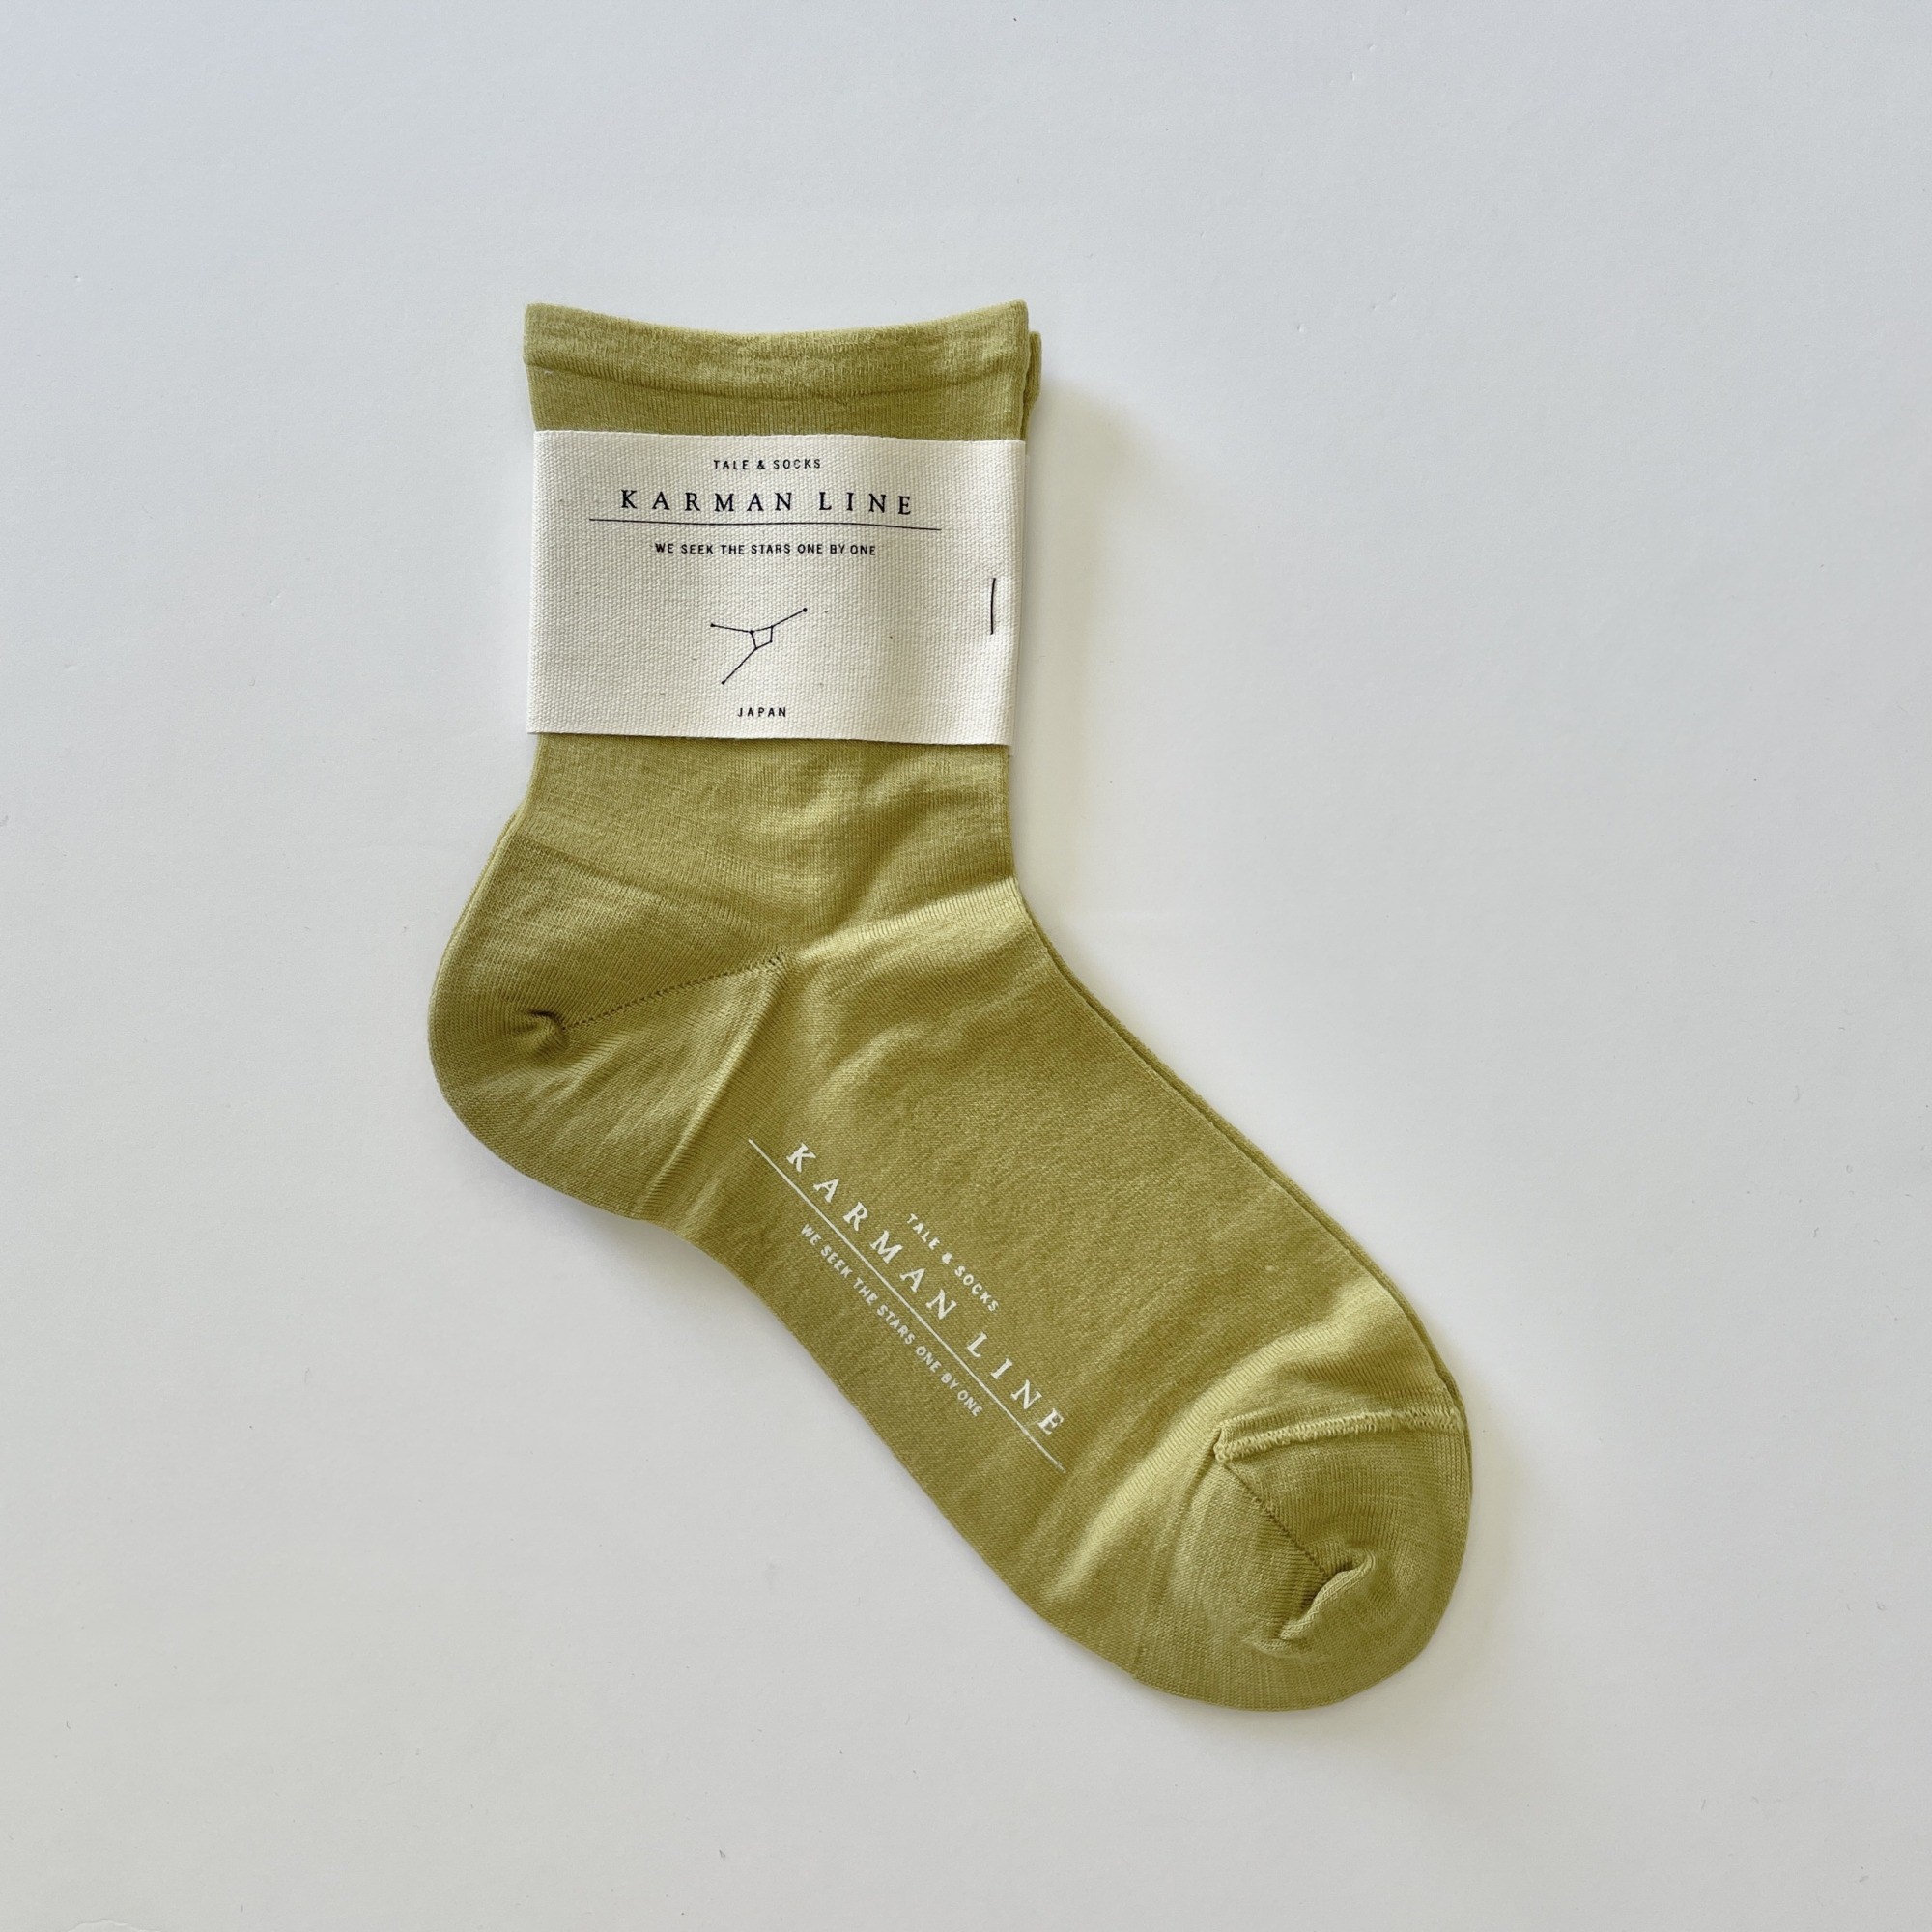 KARMAN LINE CANCER / socks / Lime